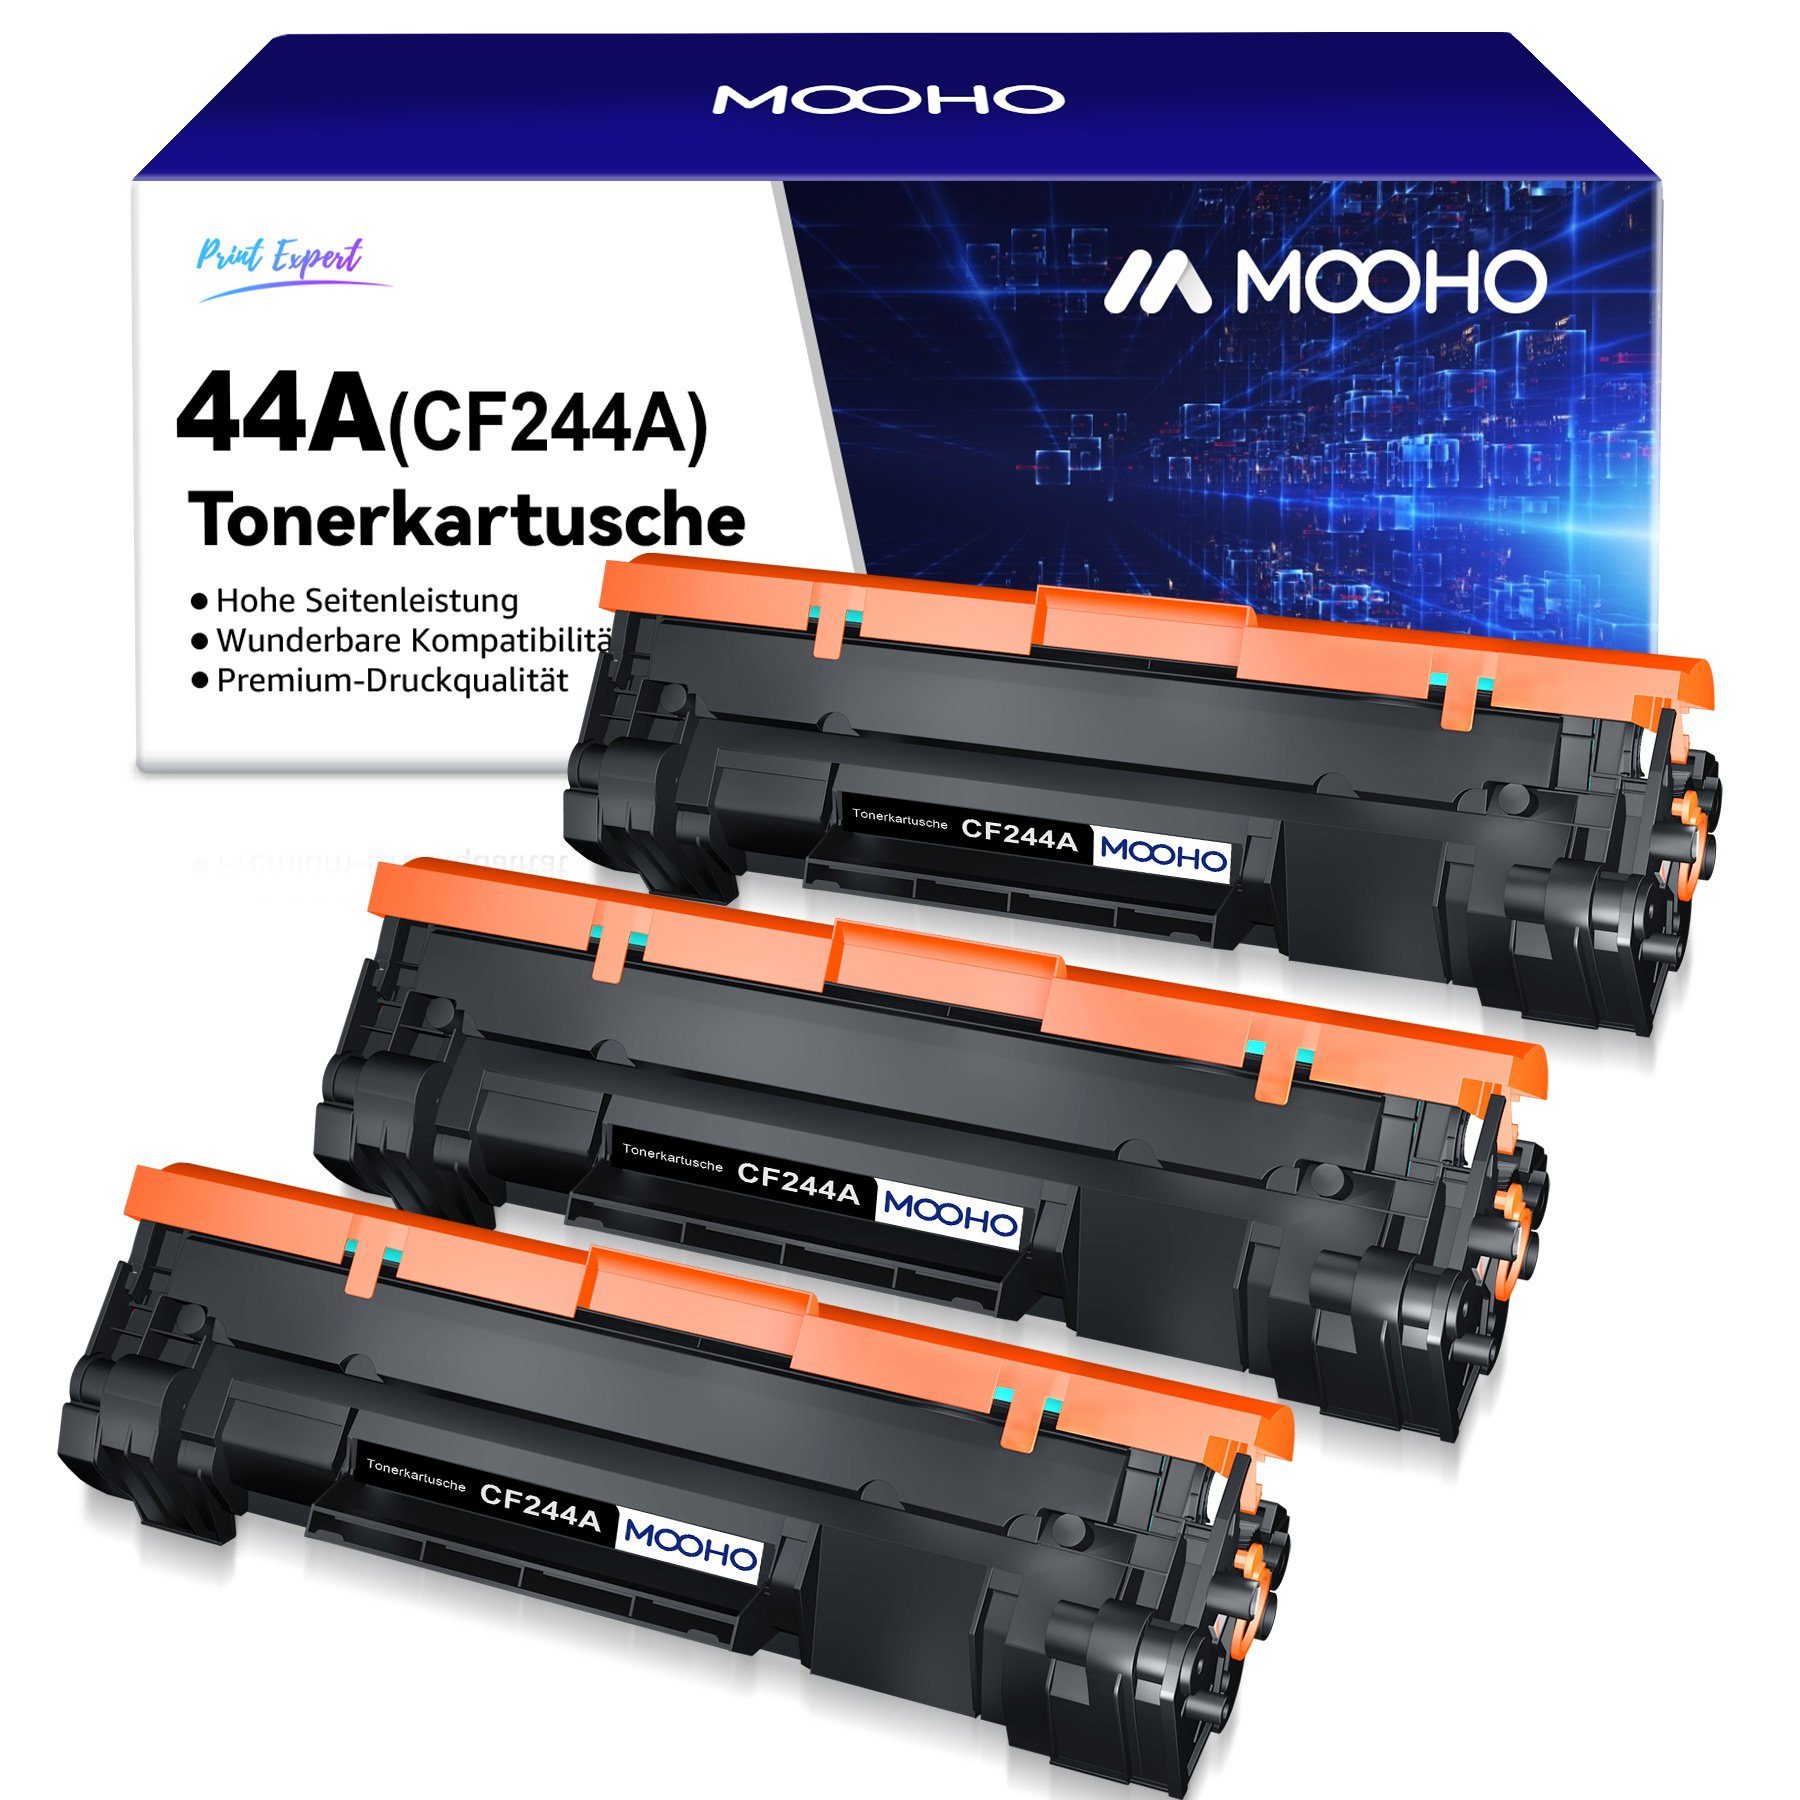 MOOHO Tonerkartusche 3 Schwarz ersatz für HP 44A CF244A laserjet pro m15w m28w toner